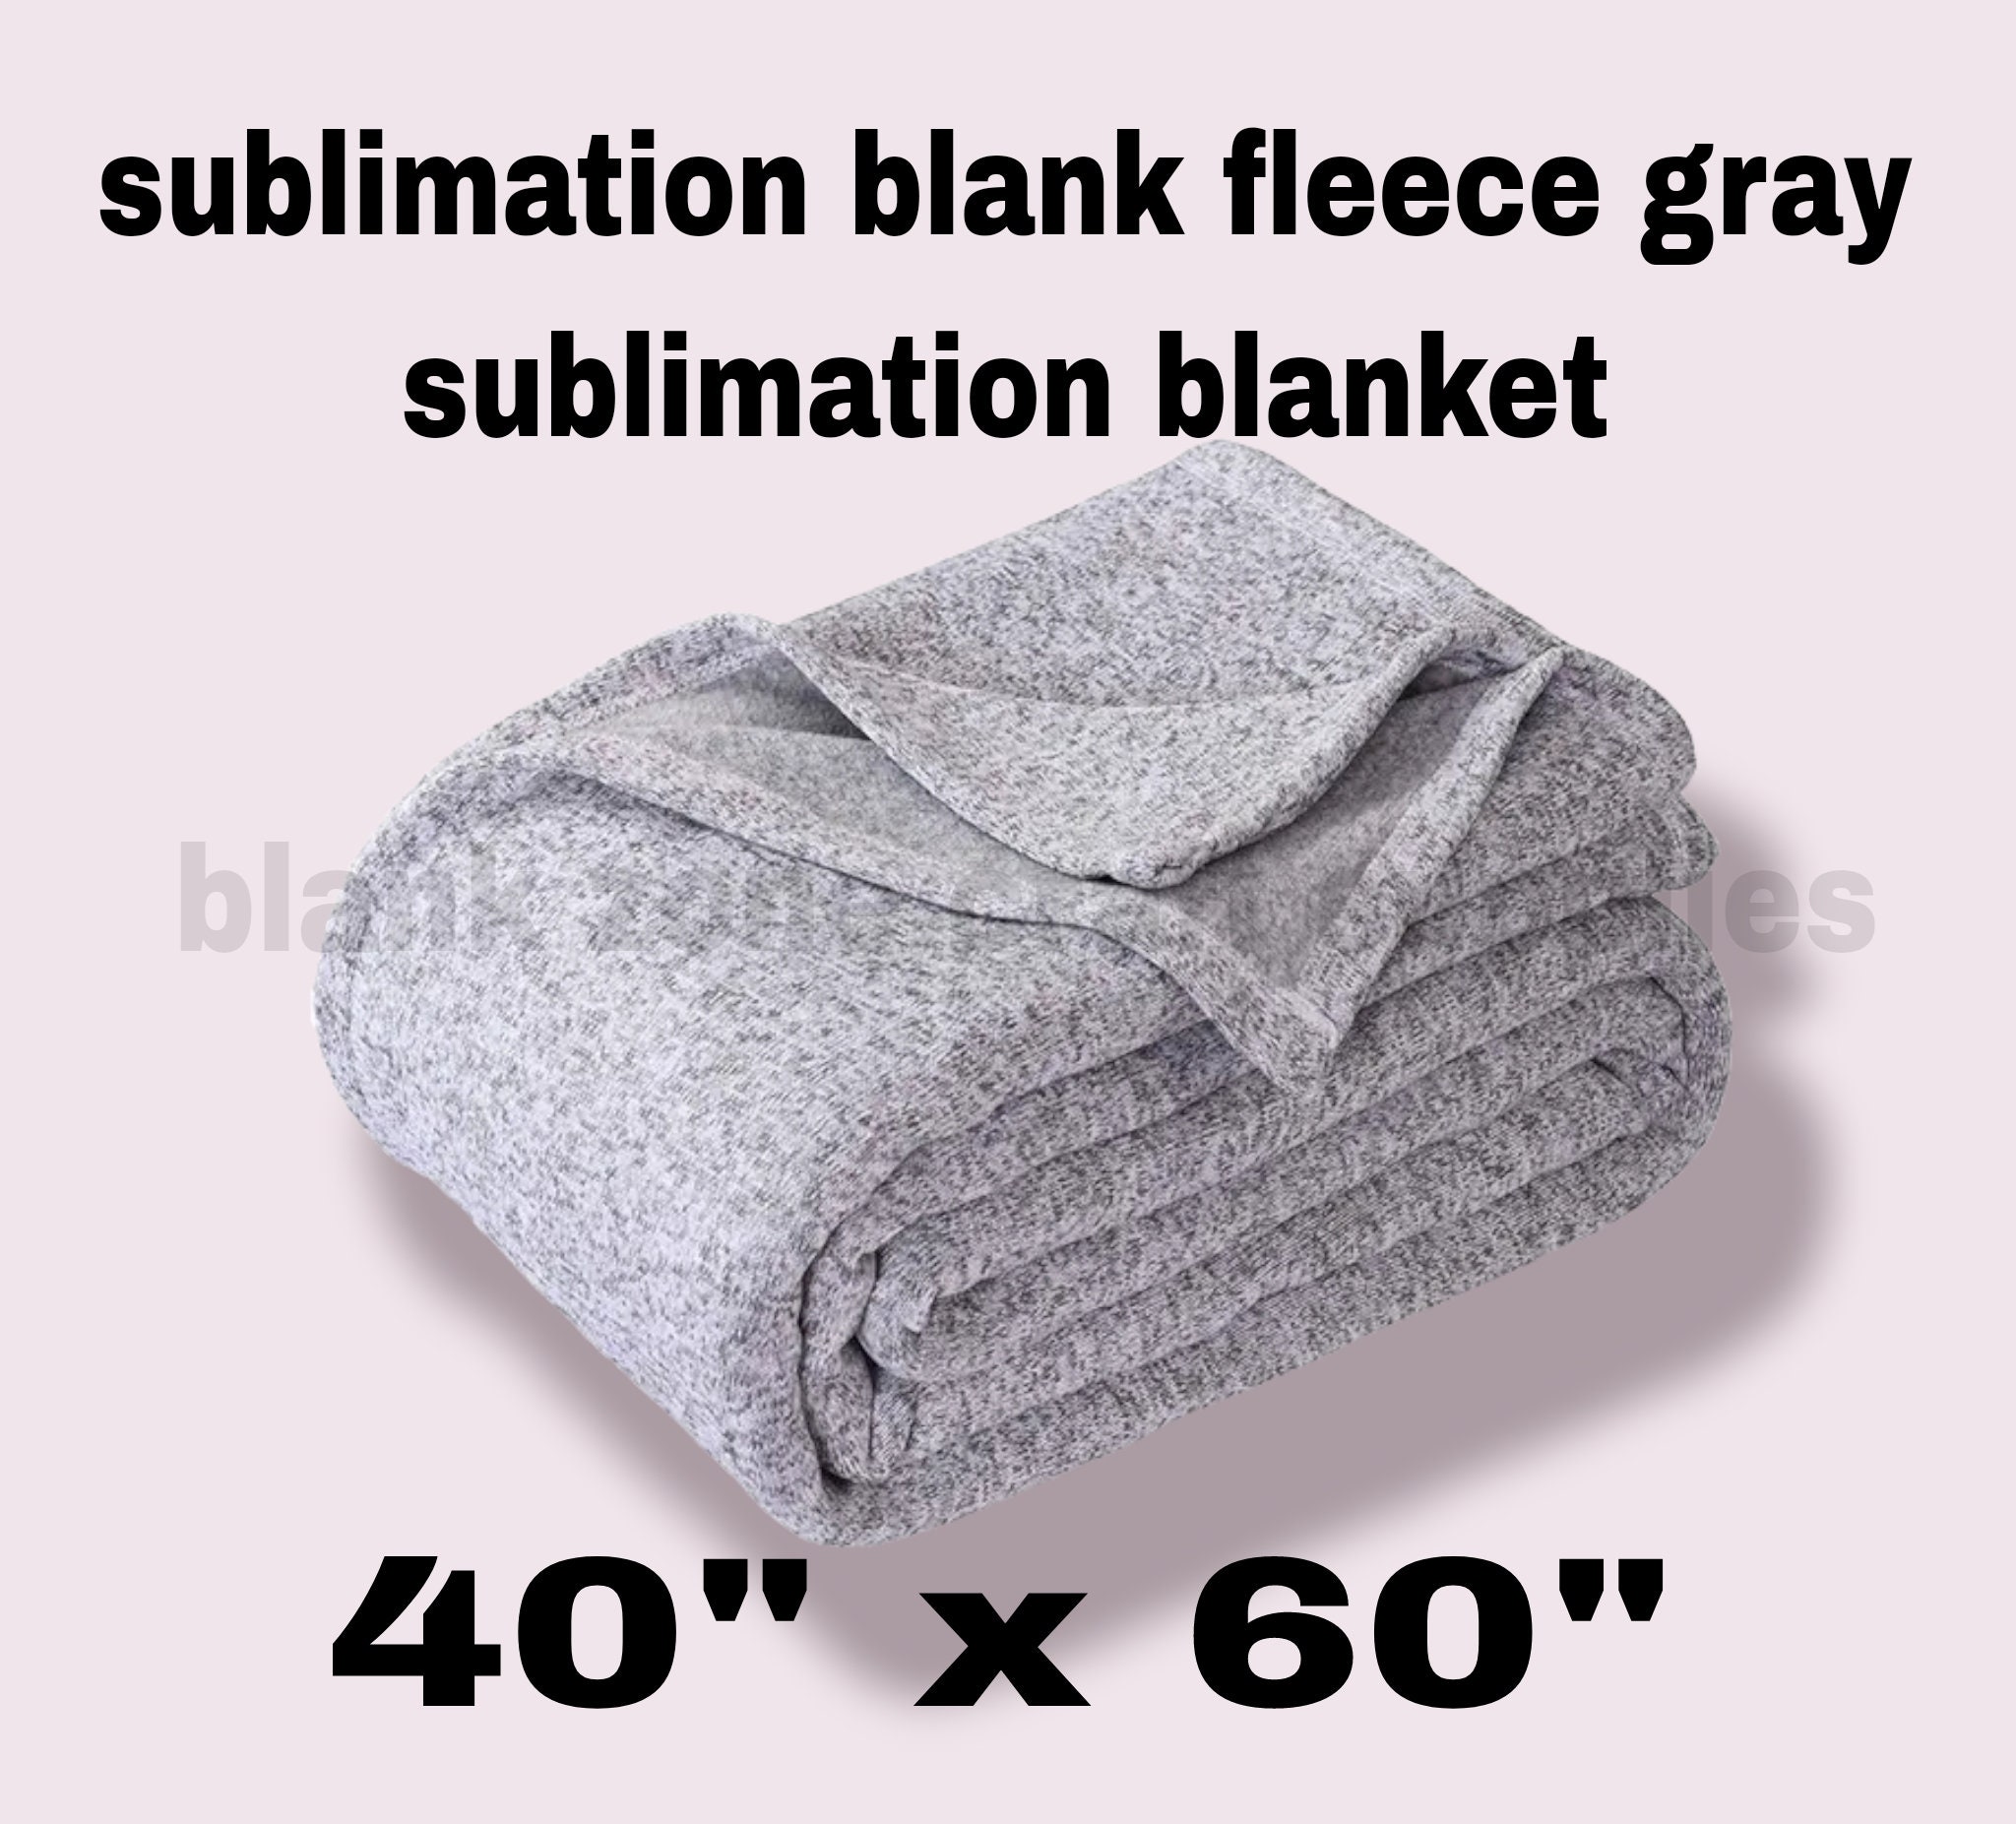 Sublimation fleece blanket